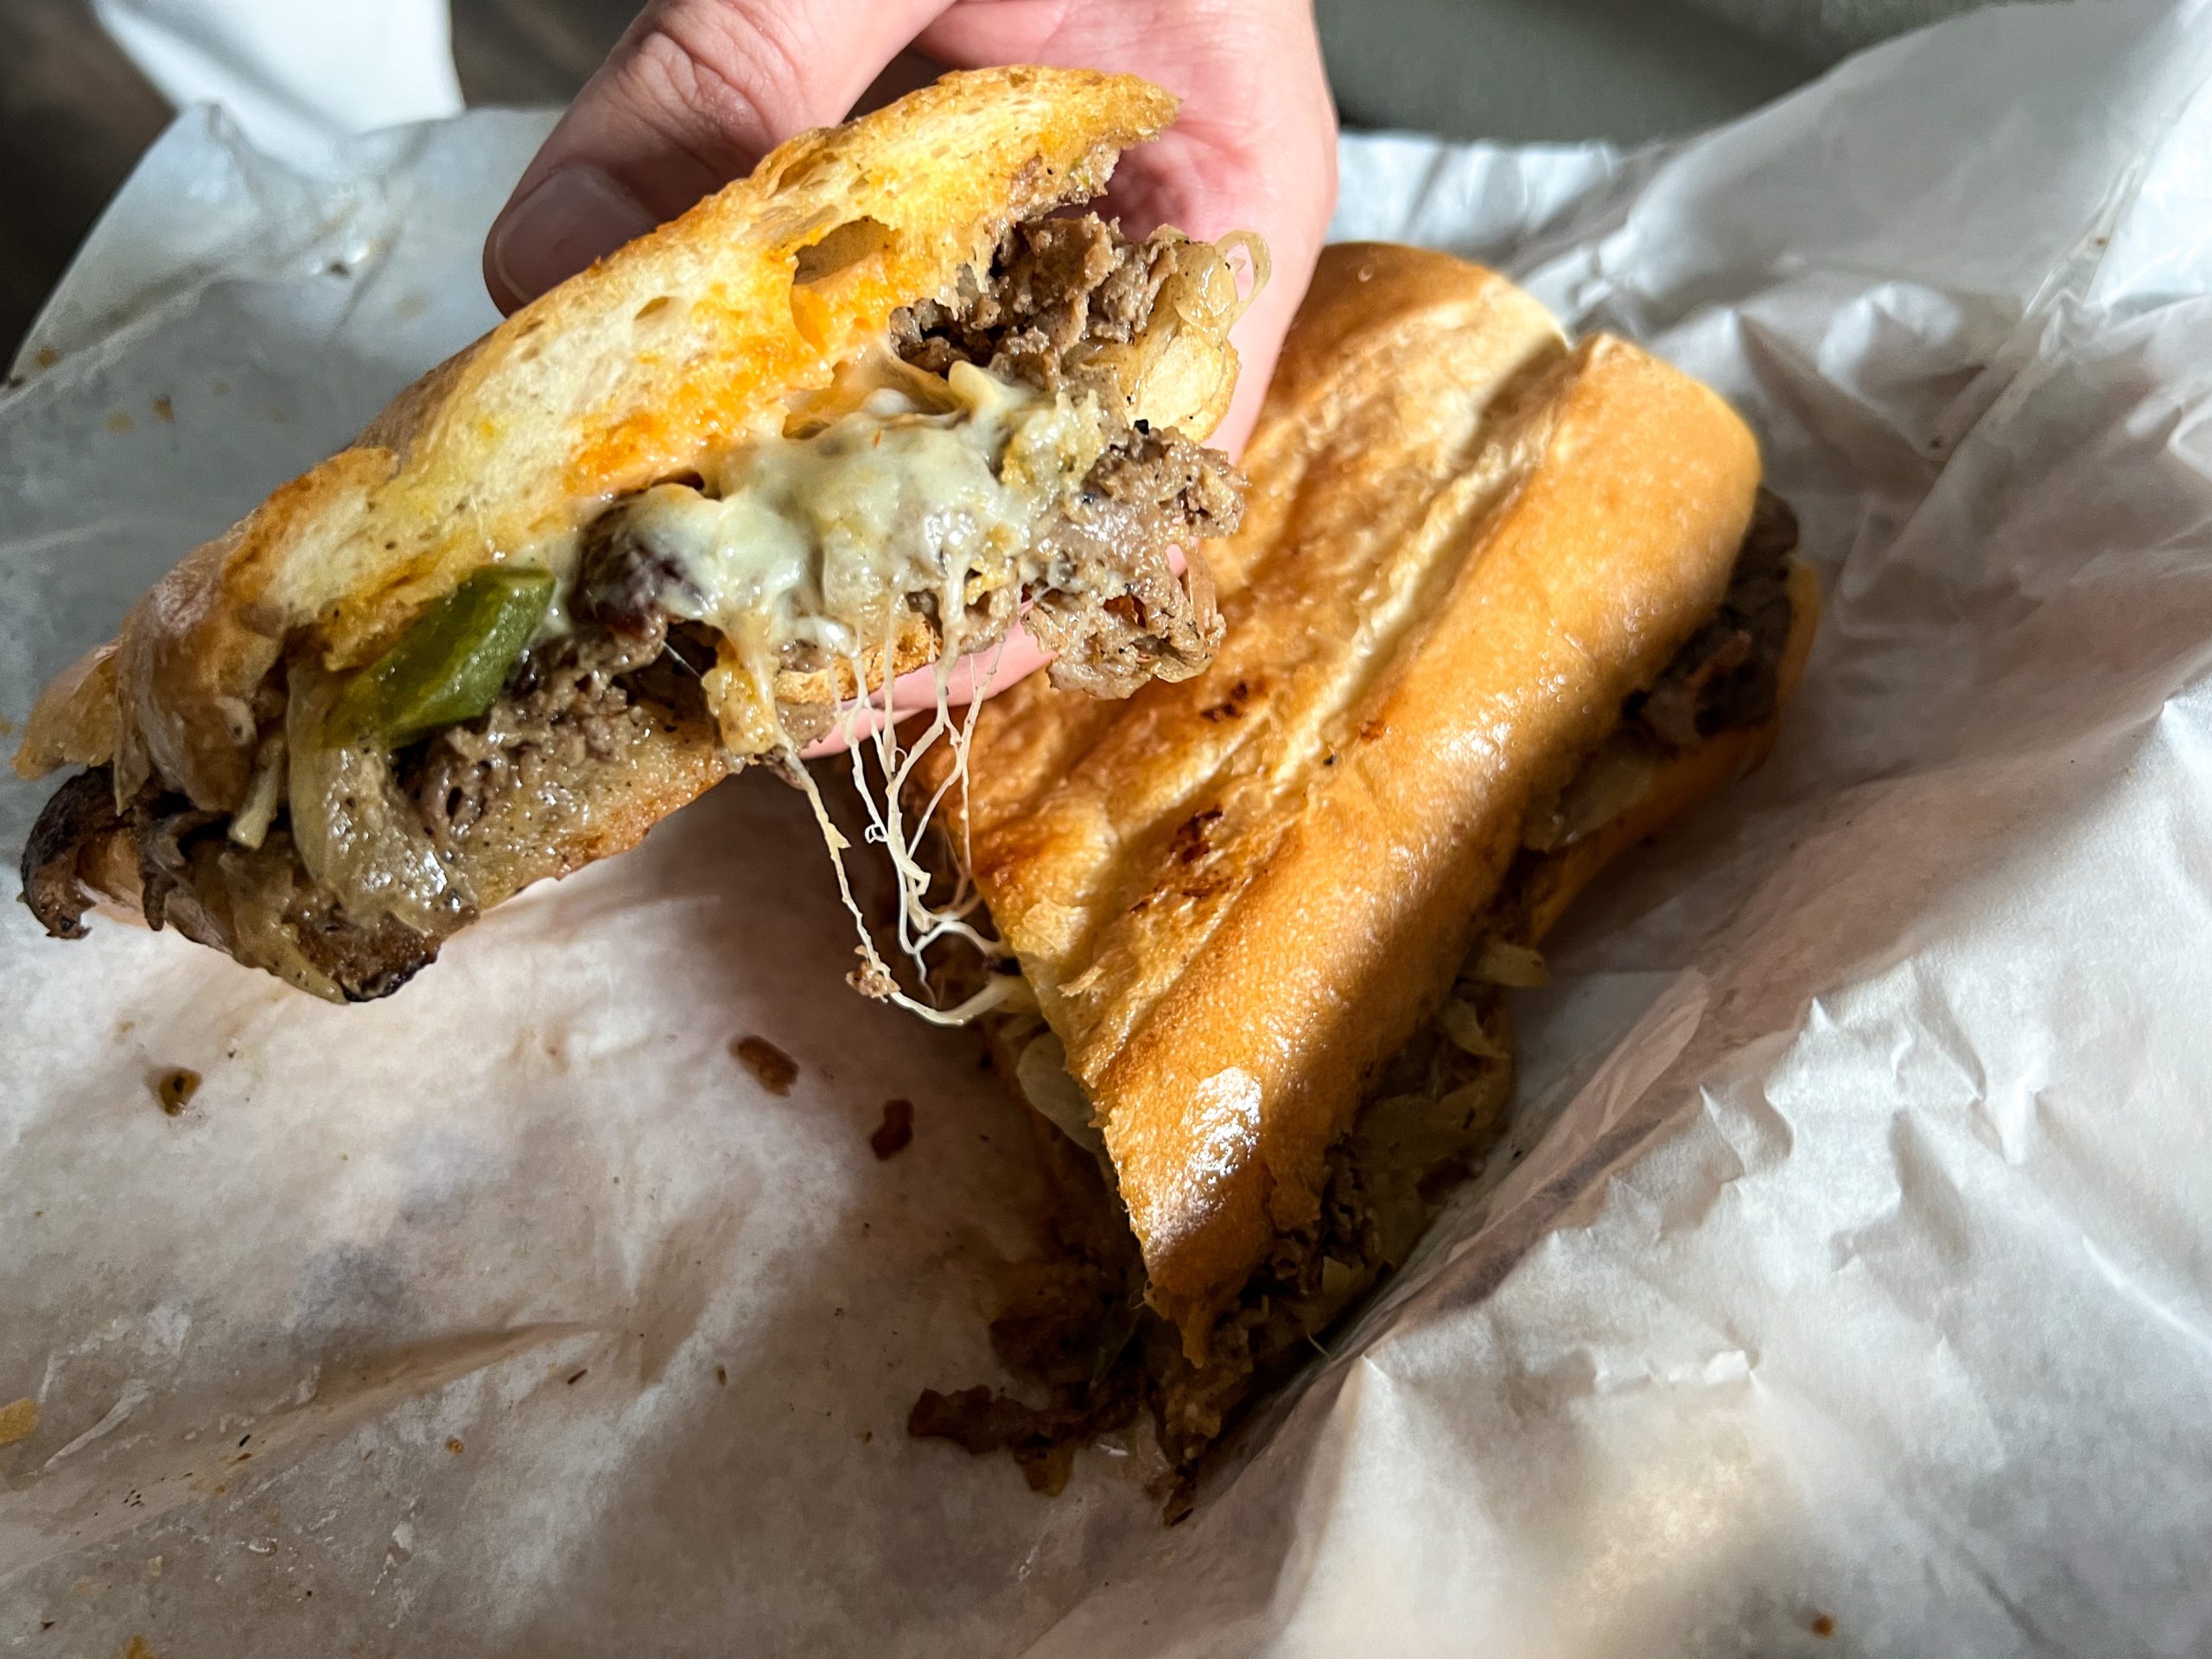 The Tampa Cheese Steak Sandwich